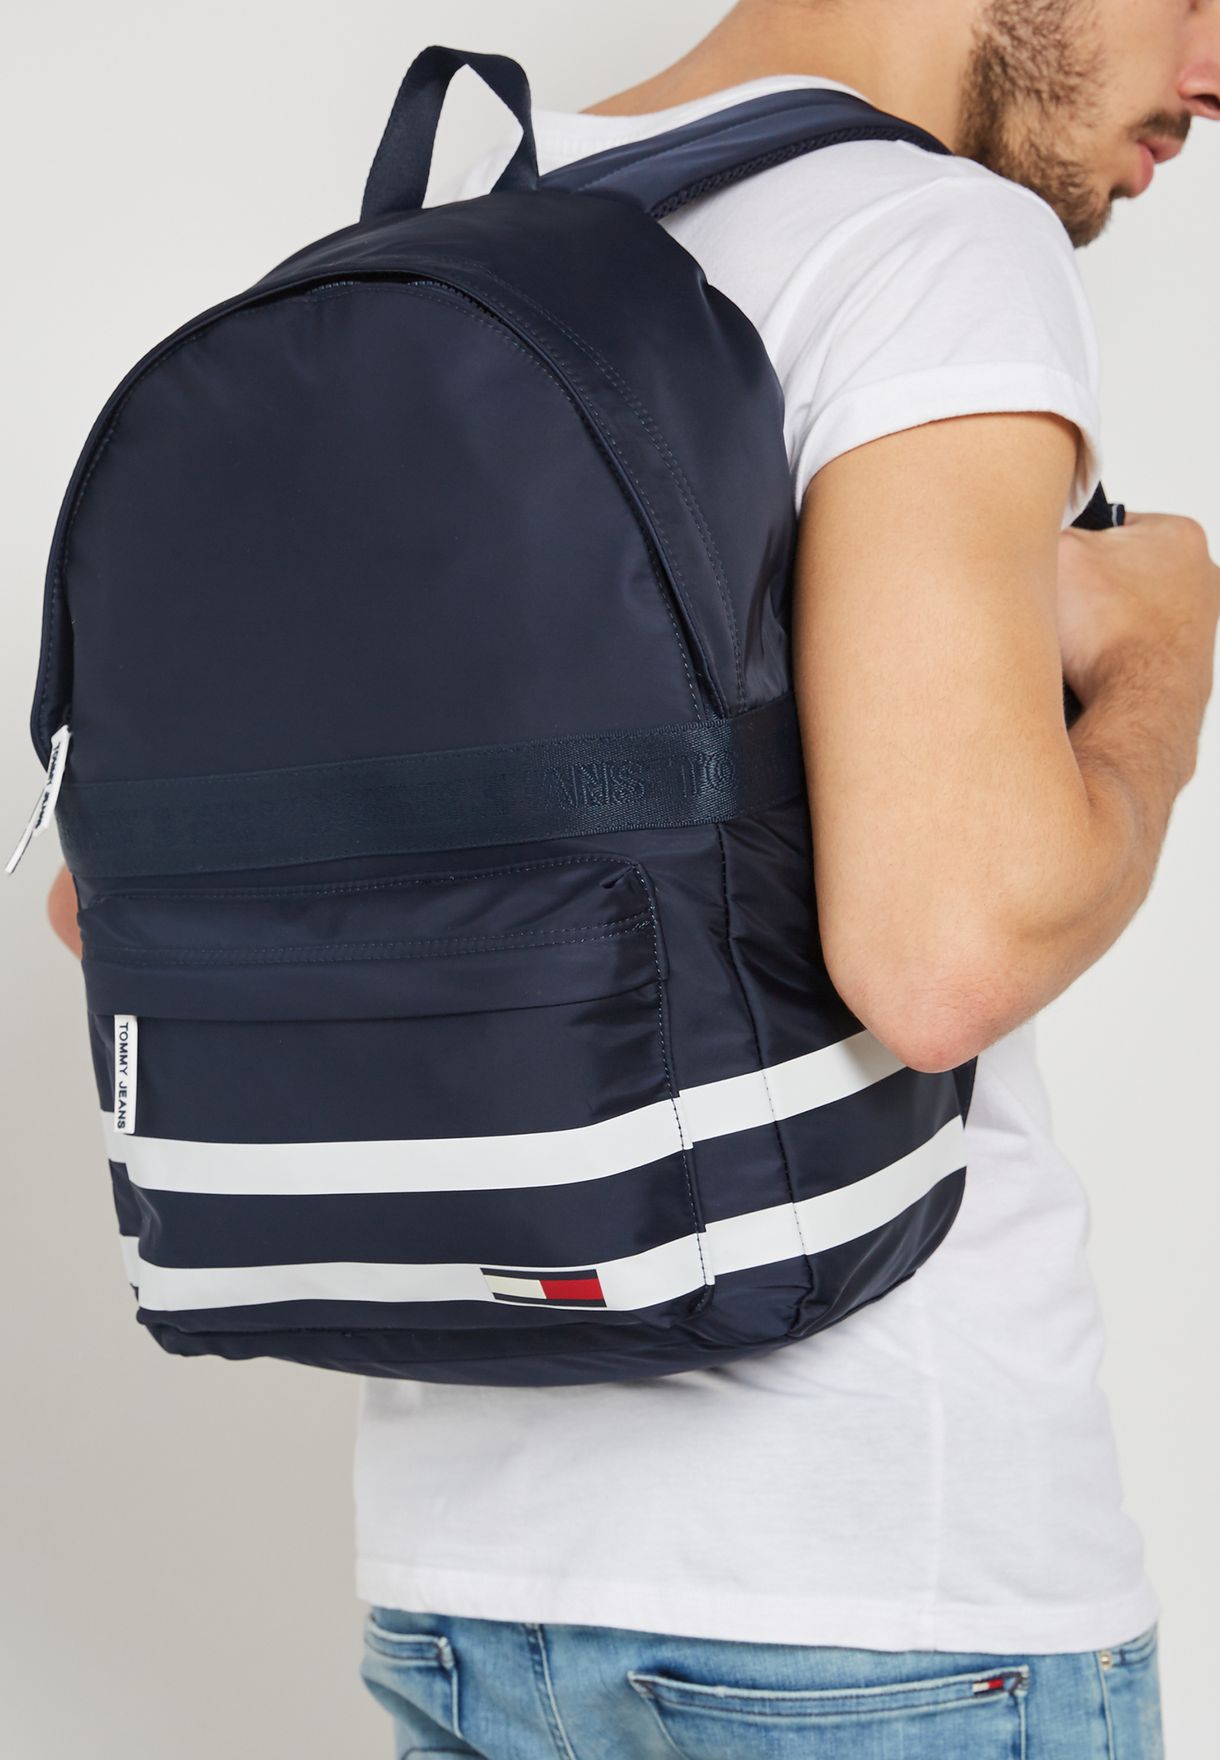 tommy varsity backpack